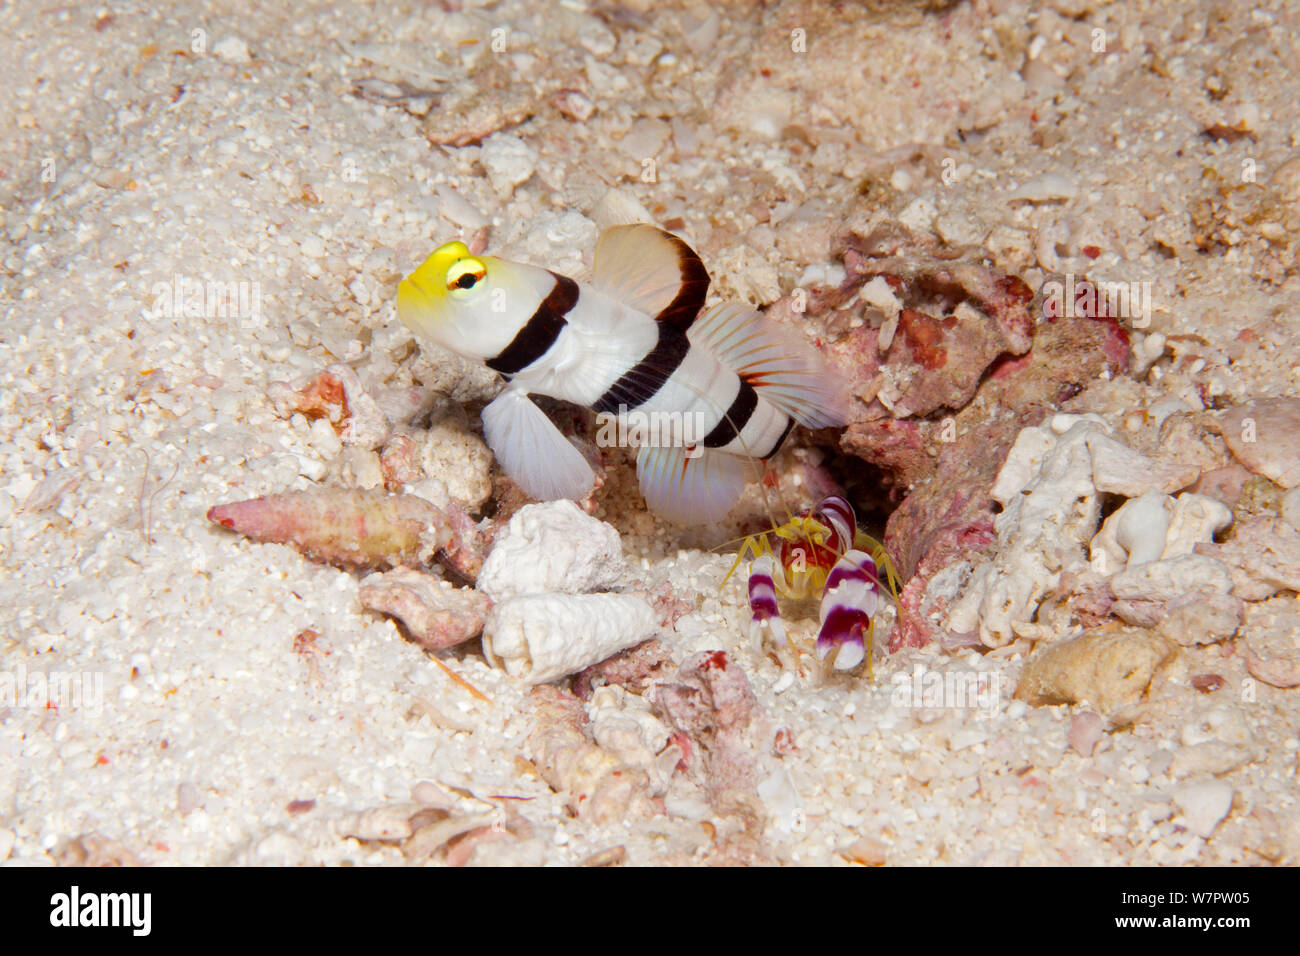 Striped / Yellownose goby (Stonogobiops xanthorhinica) with alpheid shrimp (Alpheus randalli) sharing burrow, Maldives, Indian Ocean Stock Photo